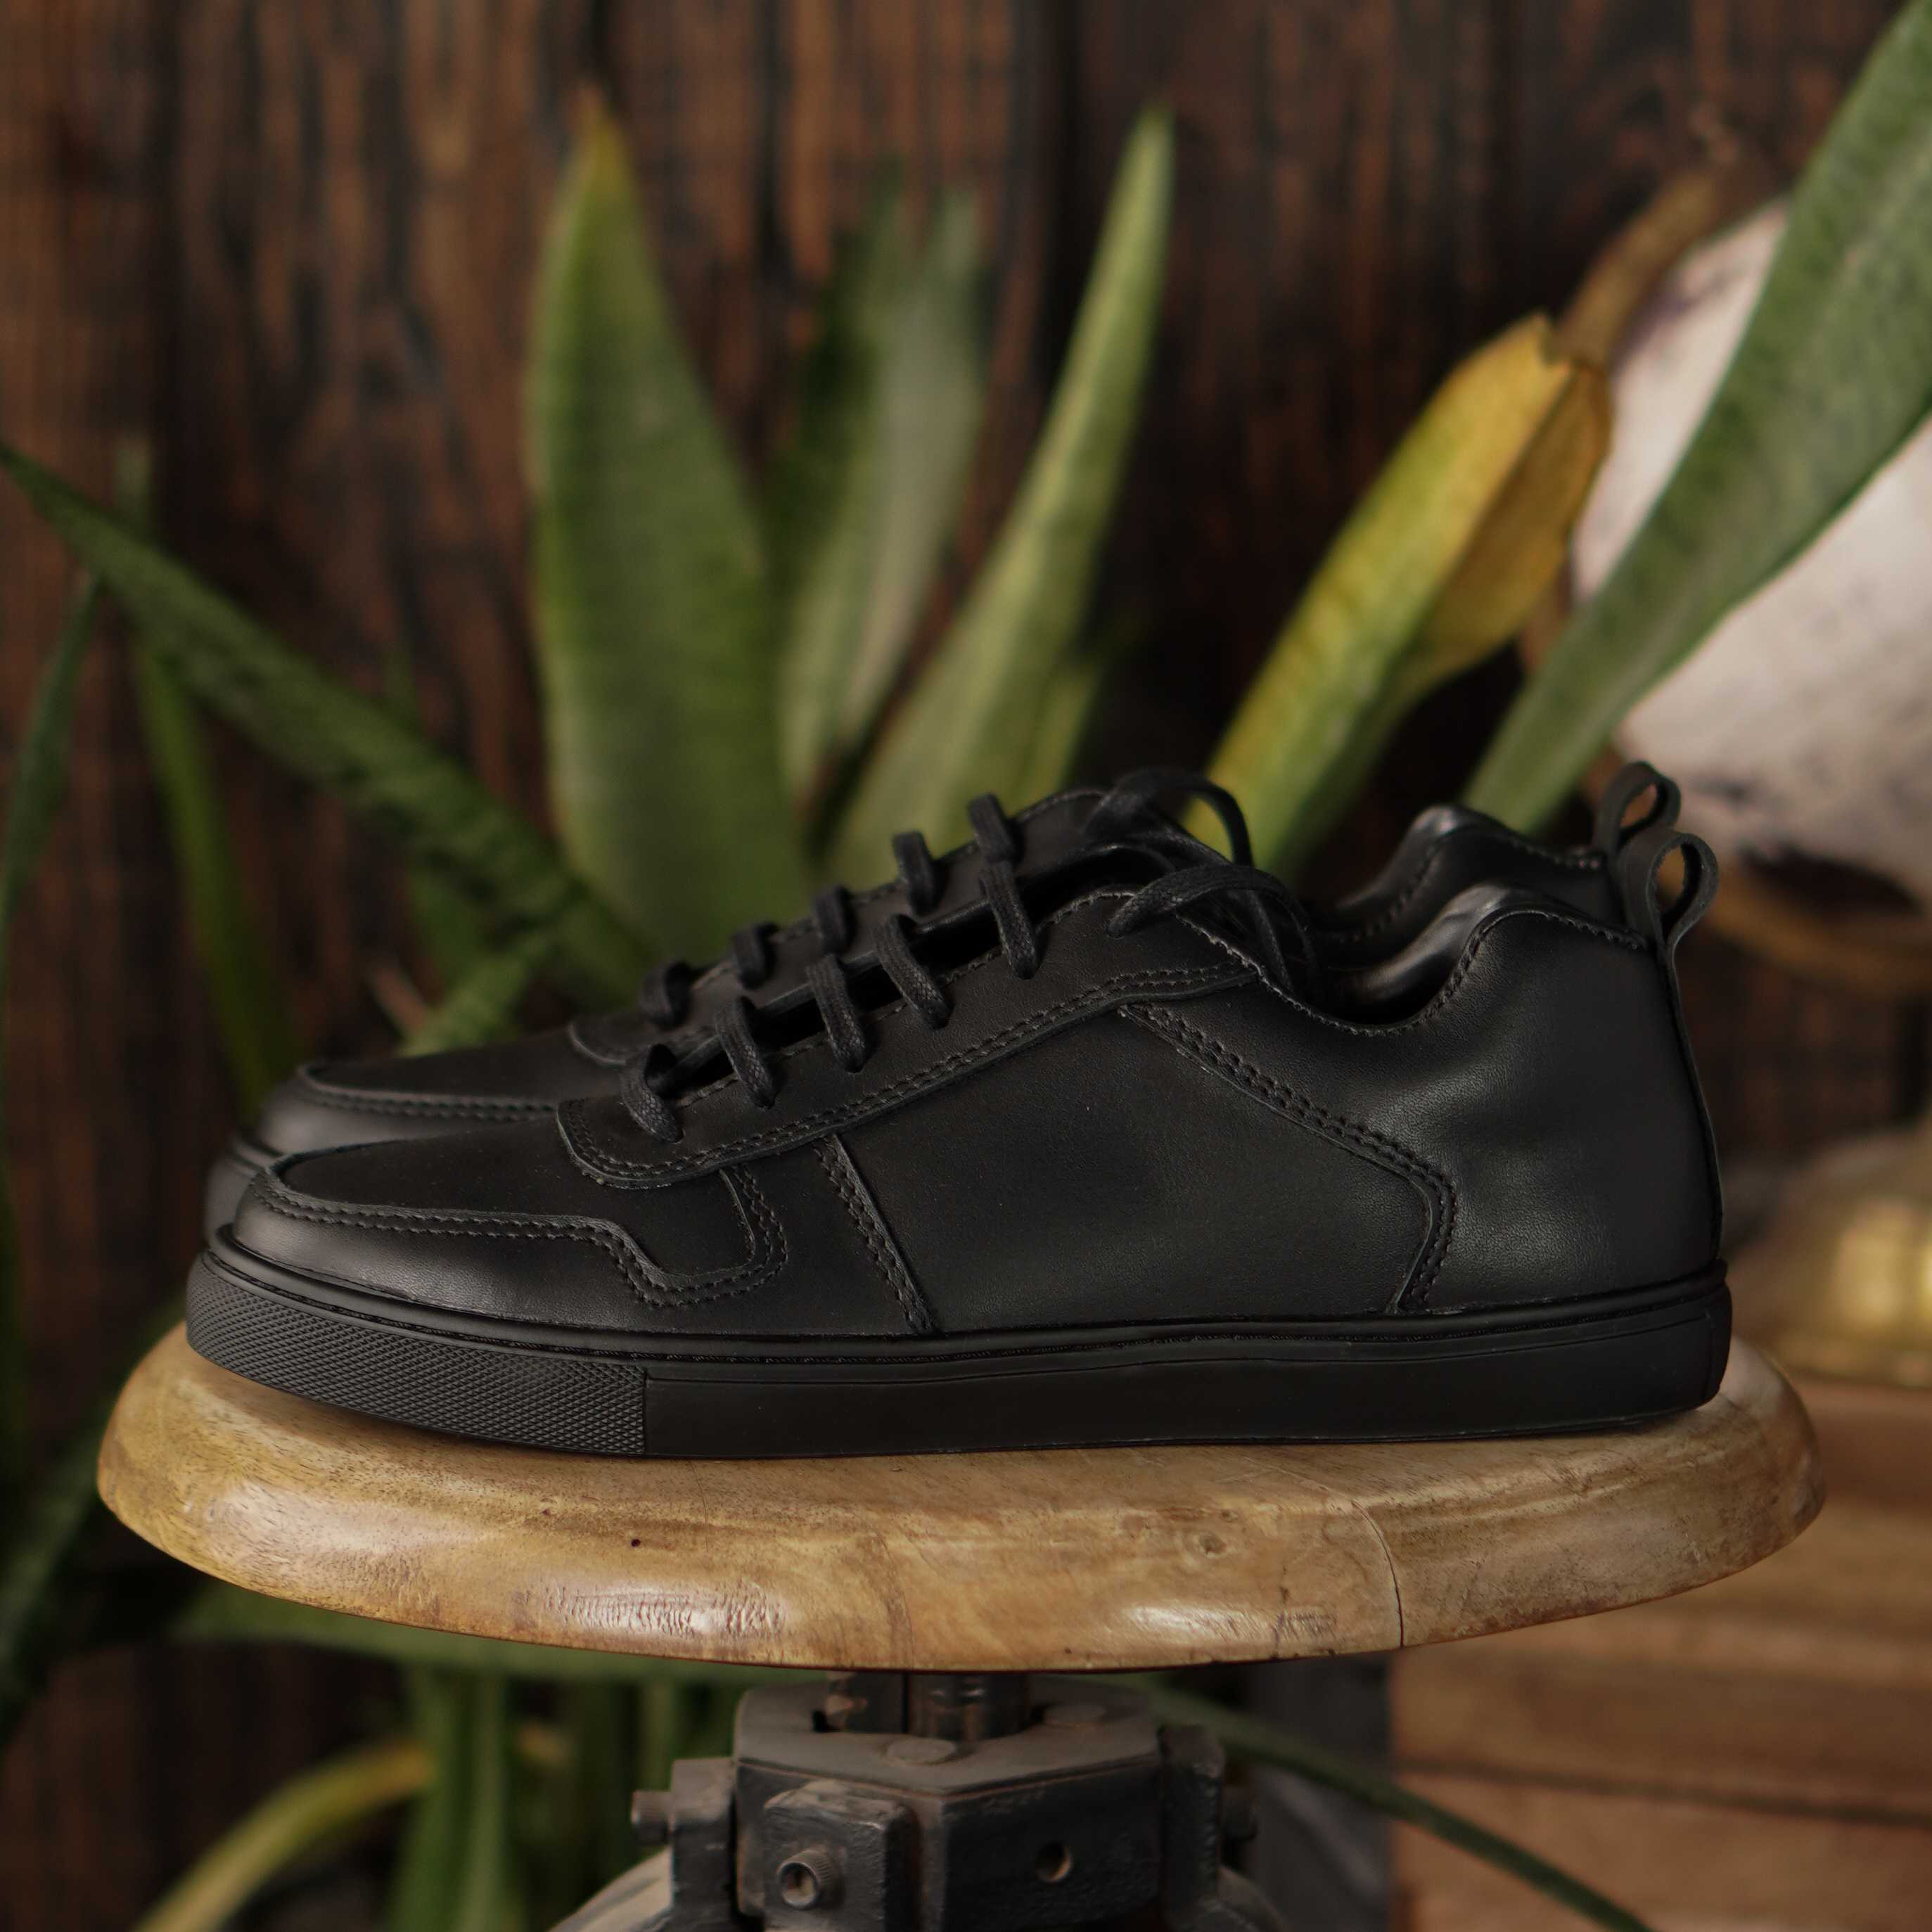 Buy Umbro Men's Brooklyn Fashion Sneaker, Grey/White, 10.5 M US at Amazon.in